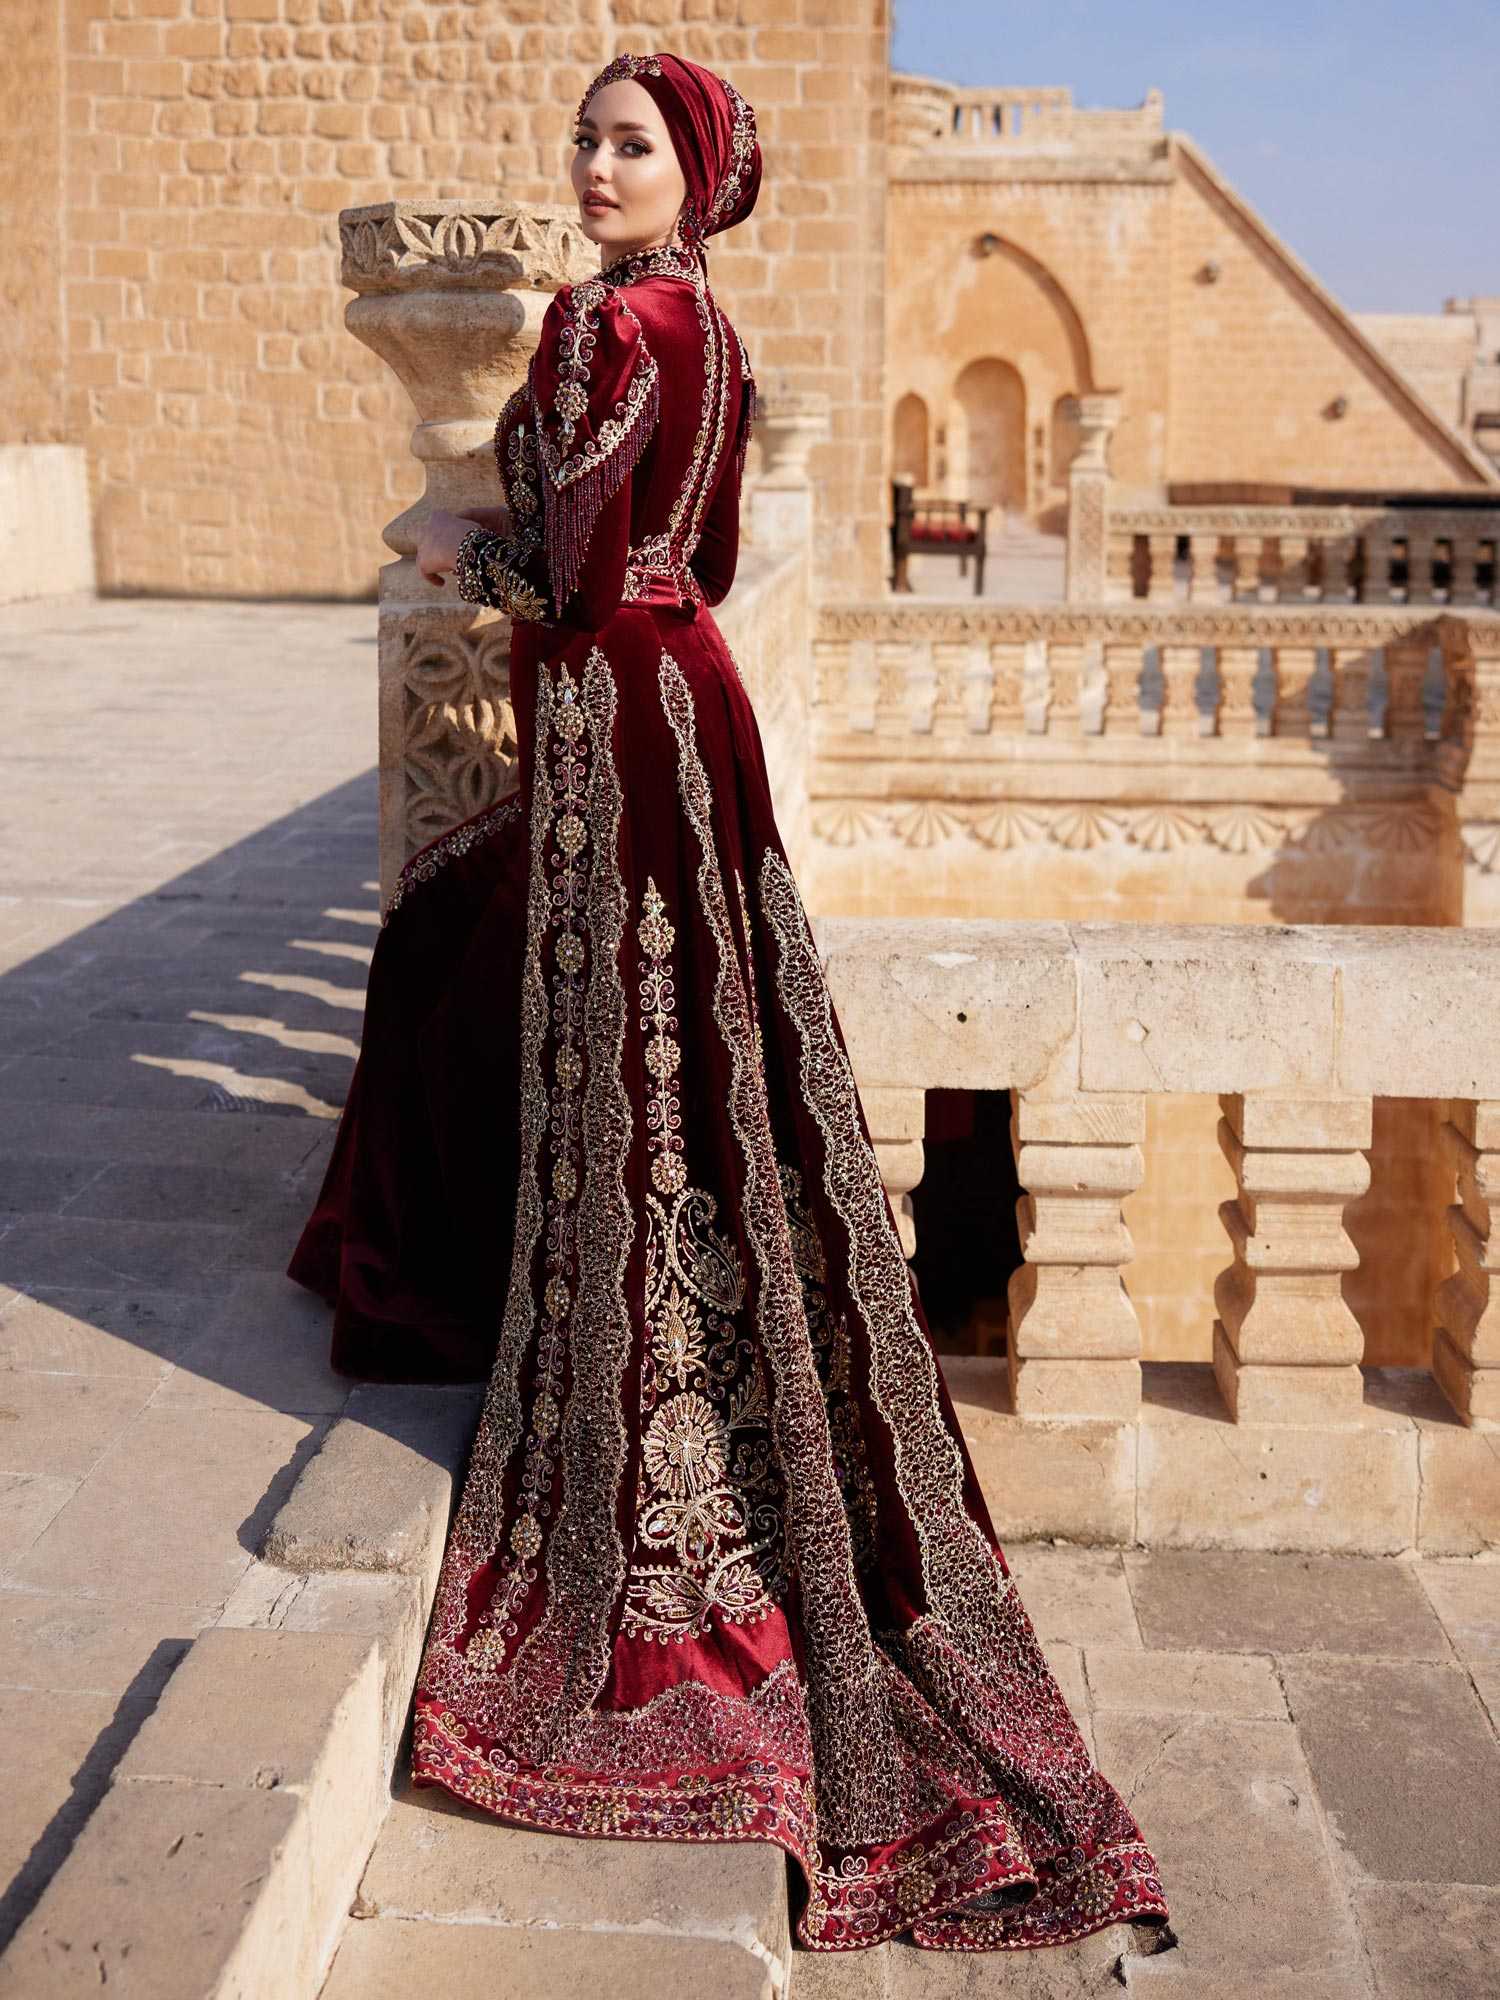 Muslim Wedding Dresses Long Sleeve A Line Brida Gowns ZW425 – TANYA BRIDAL